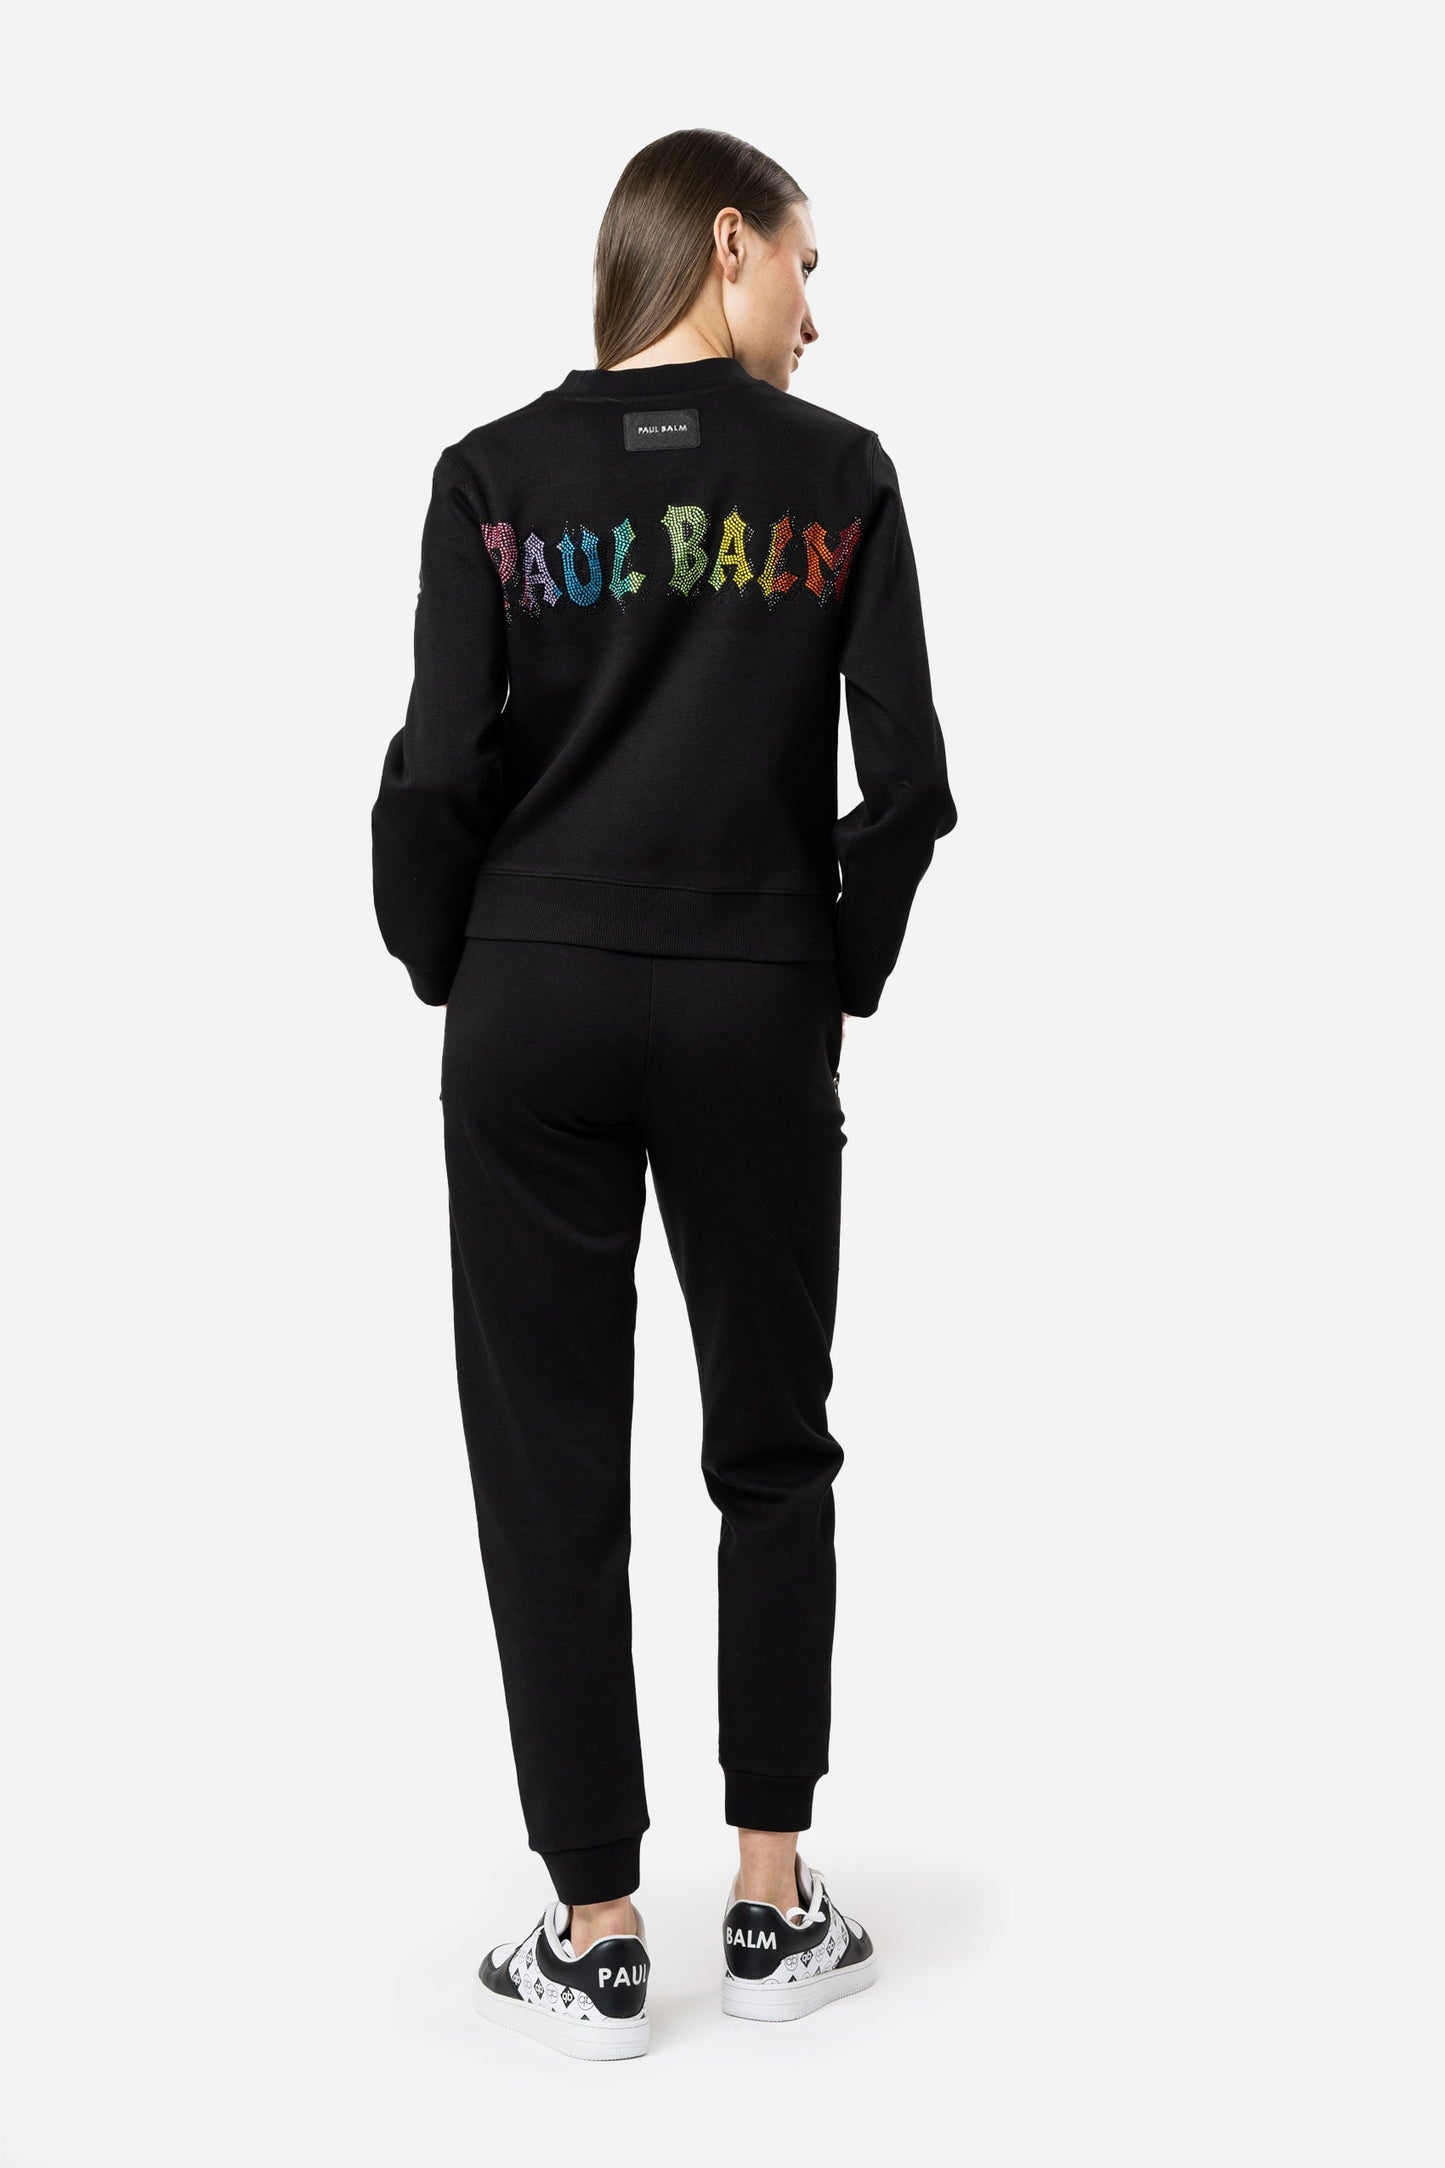 Crystal Rainbow Kanye Sweatshirt - Limited to 300 - PAUL BALM WORLD